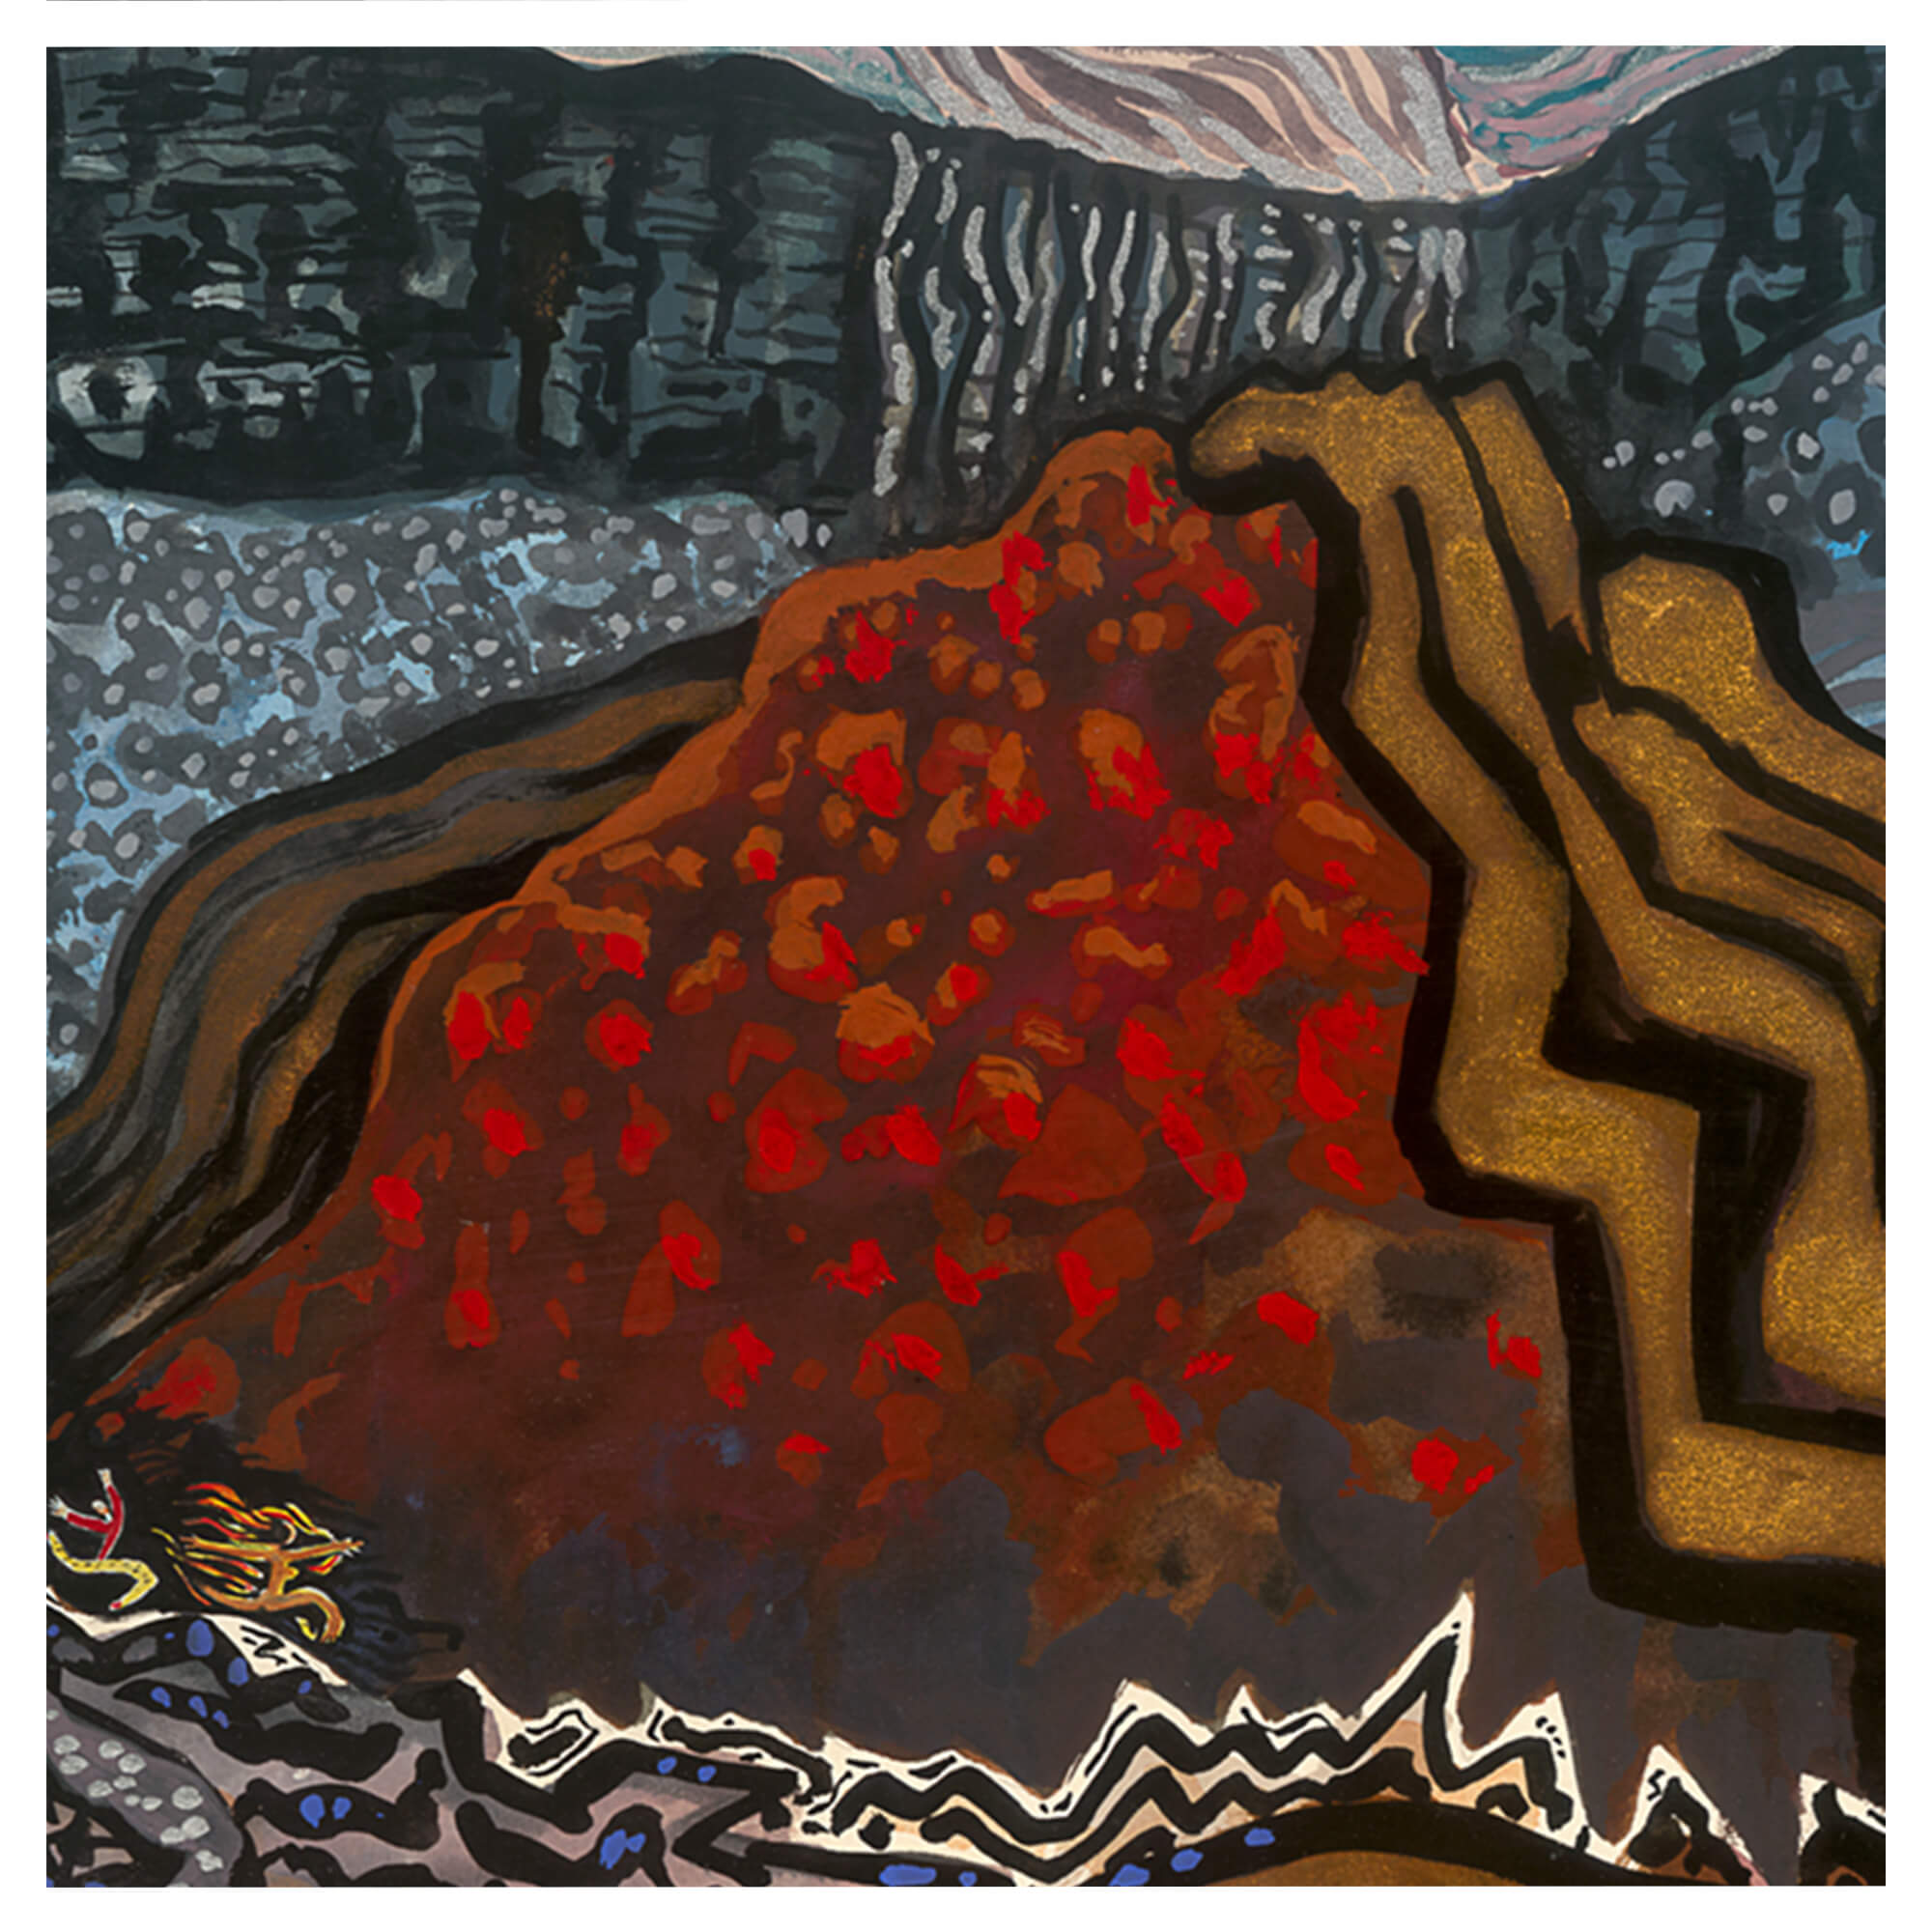 an illustration featuring a volcanic crater by hawaii artist robert hazzard